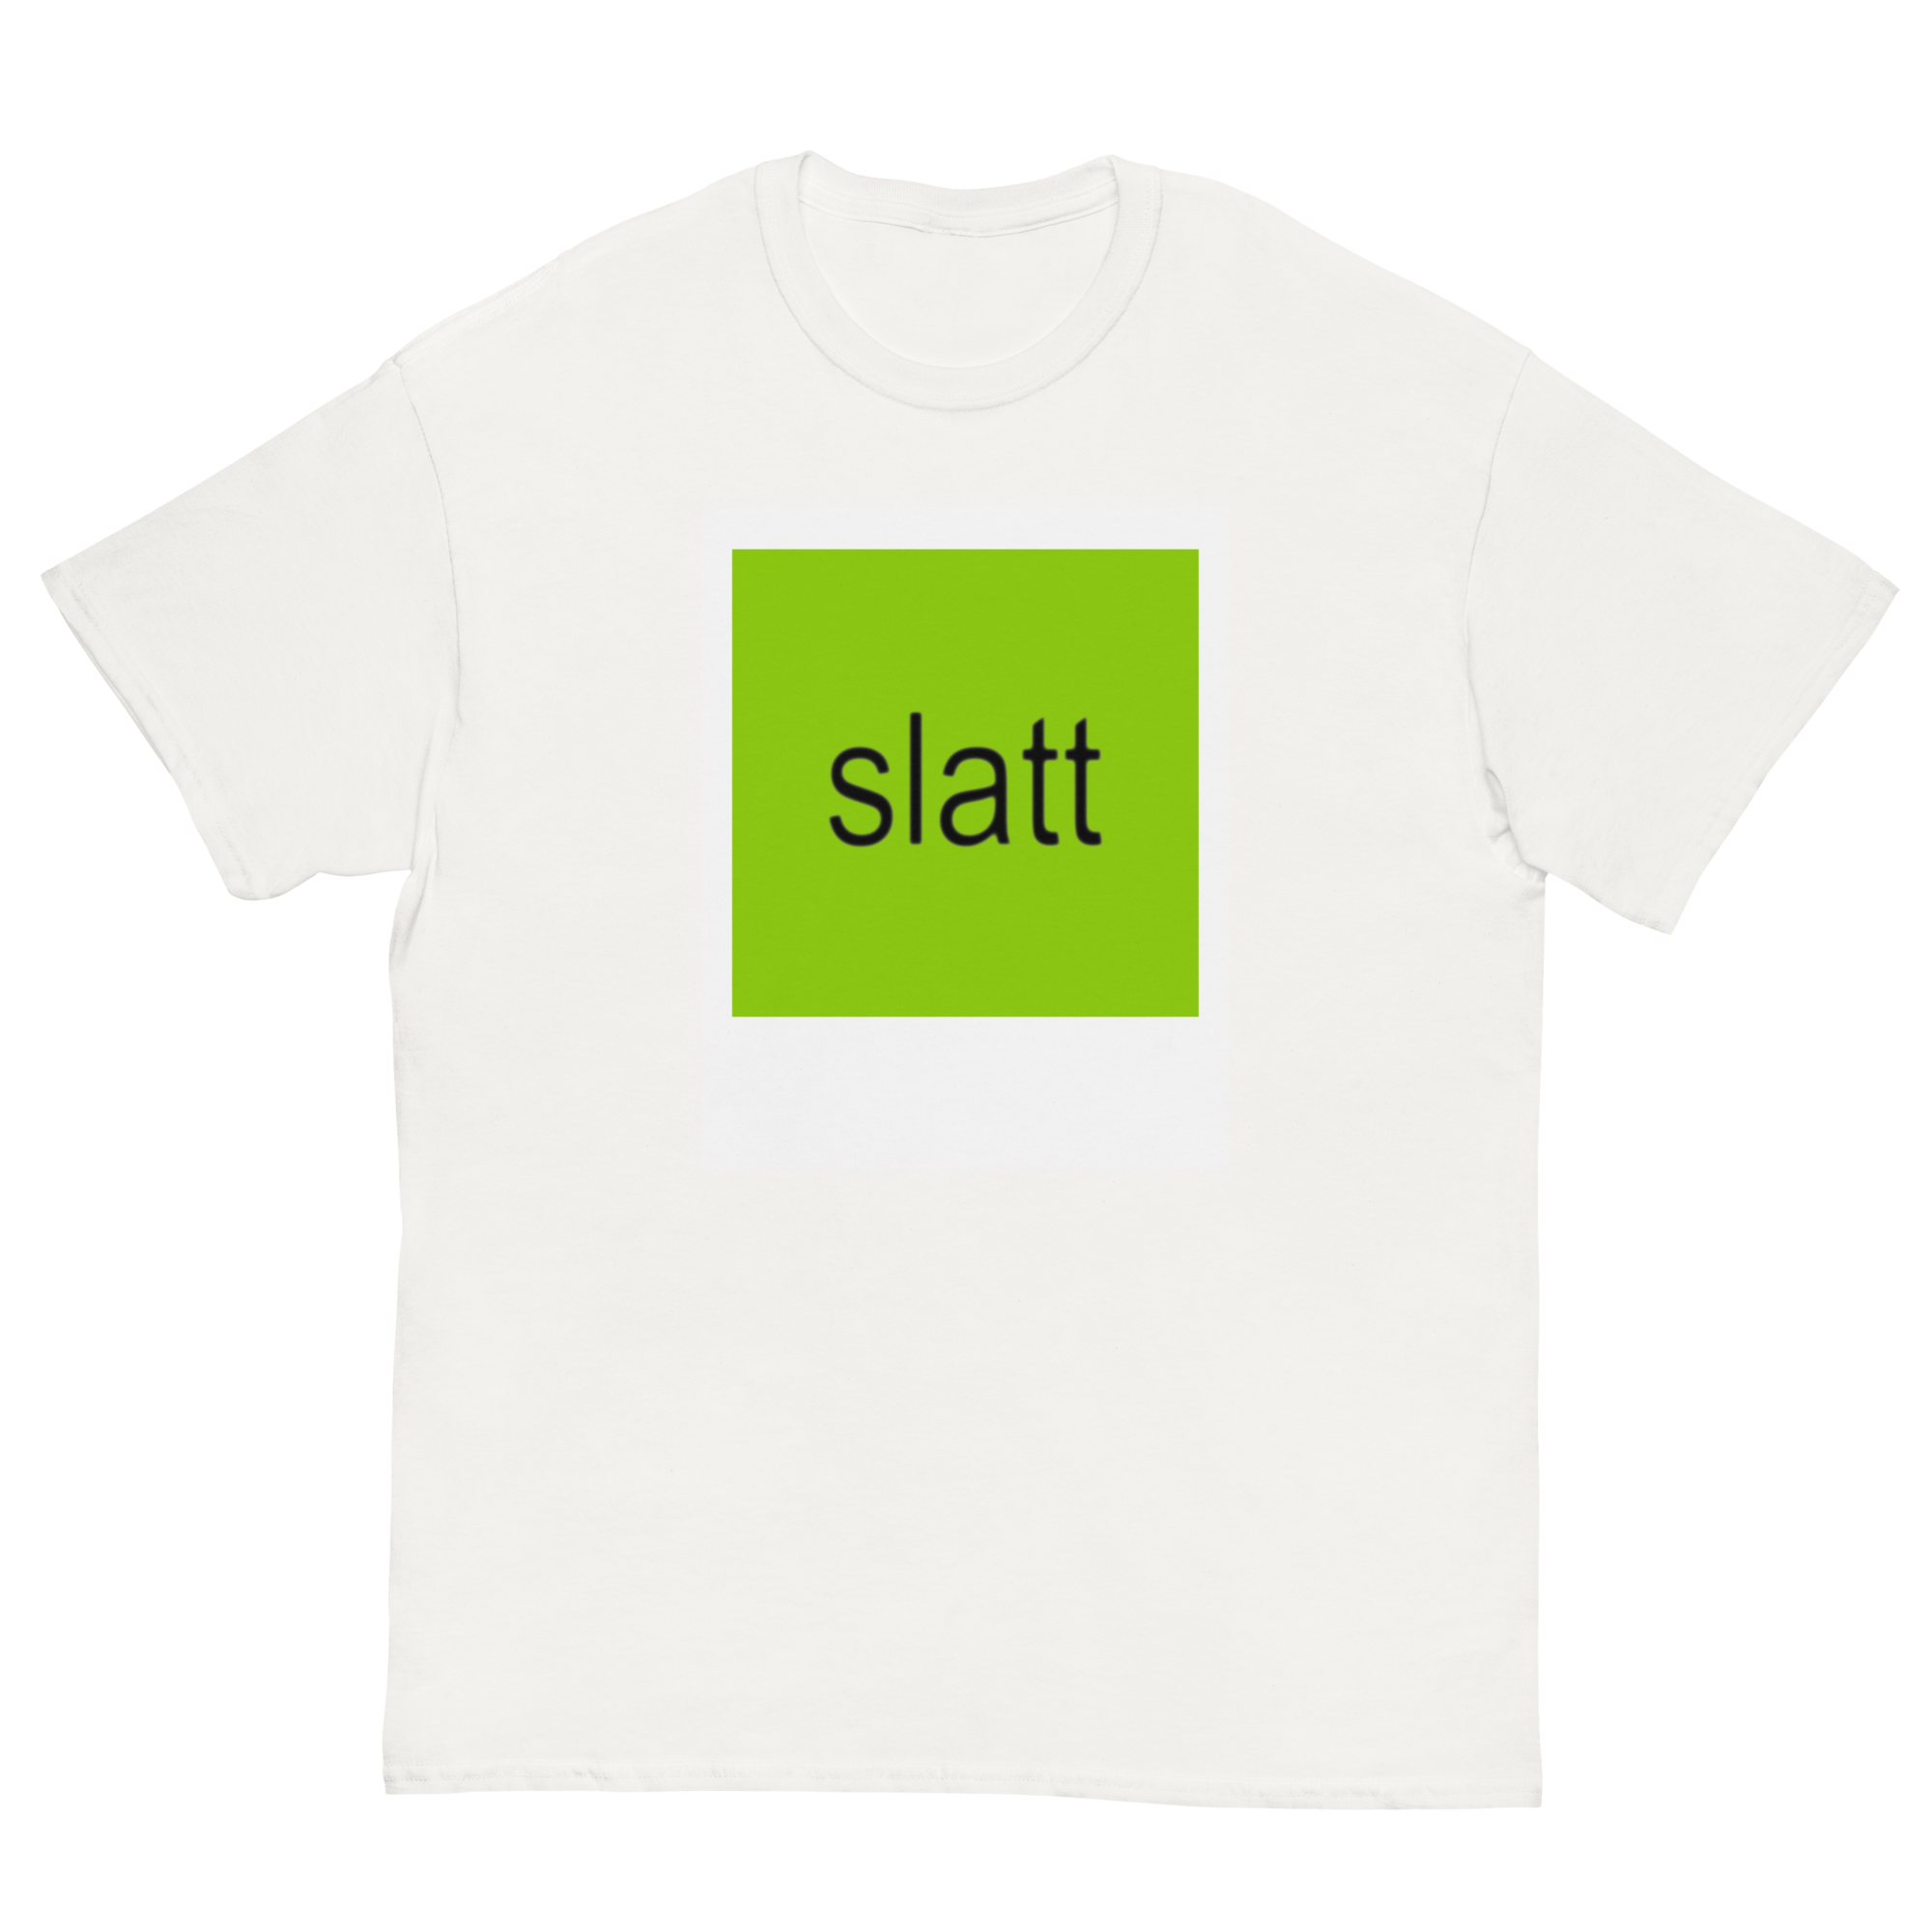 SLATT T-SHIRT